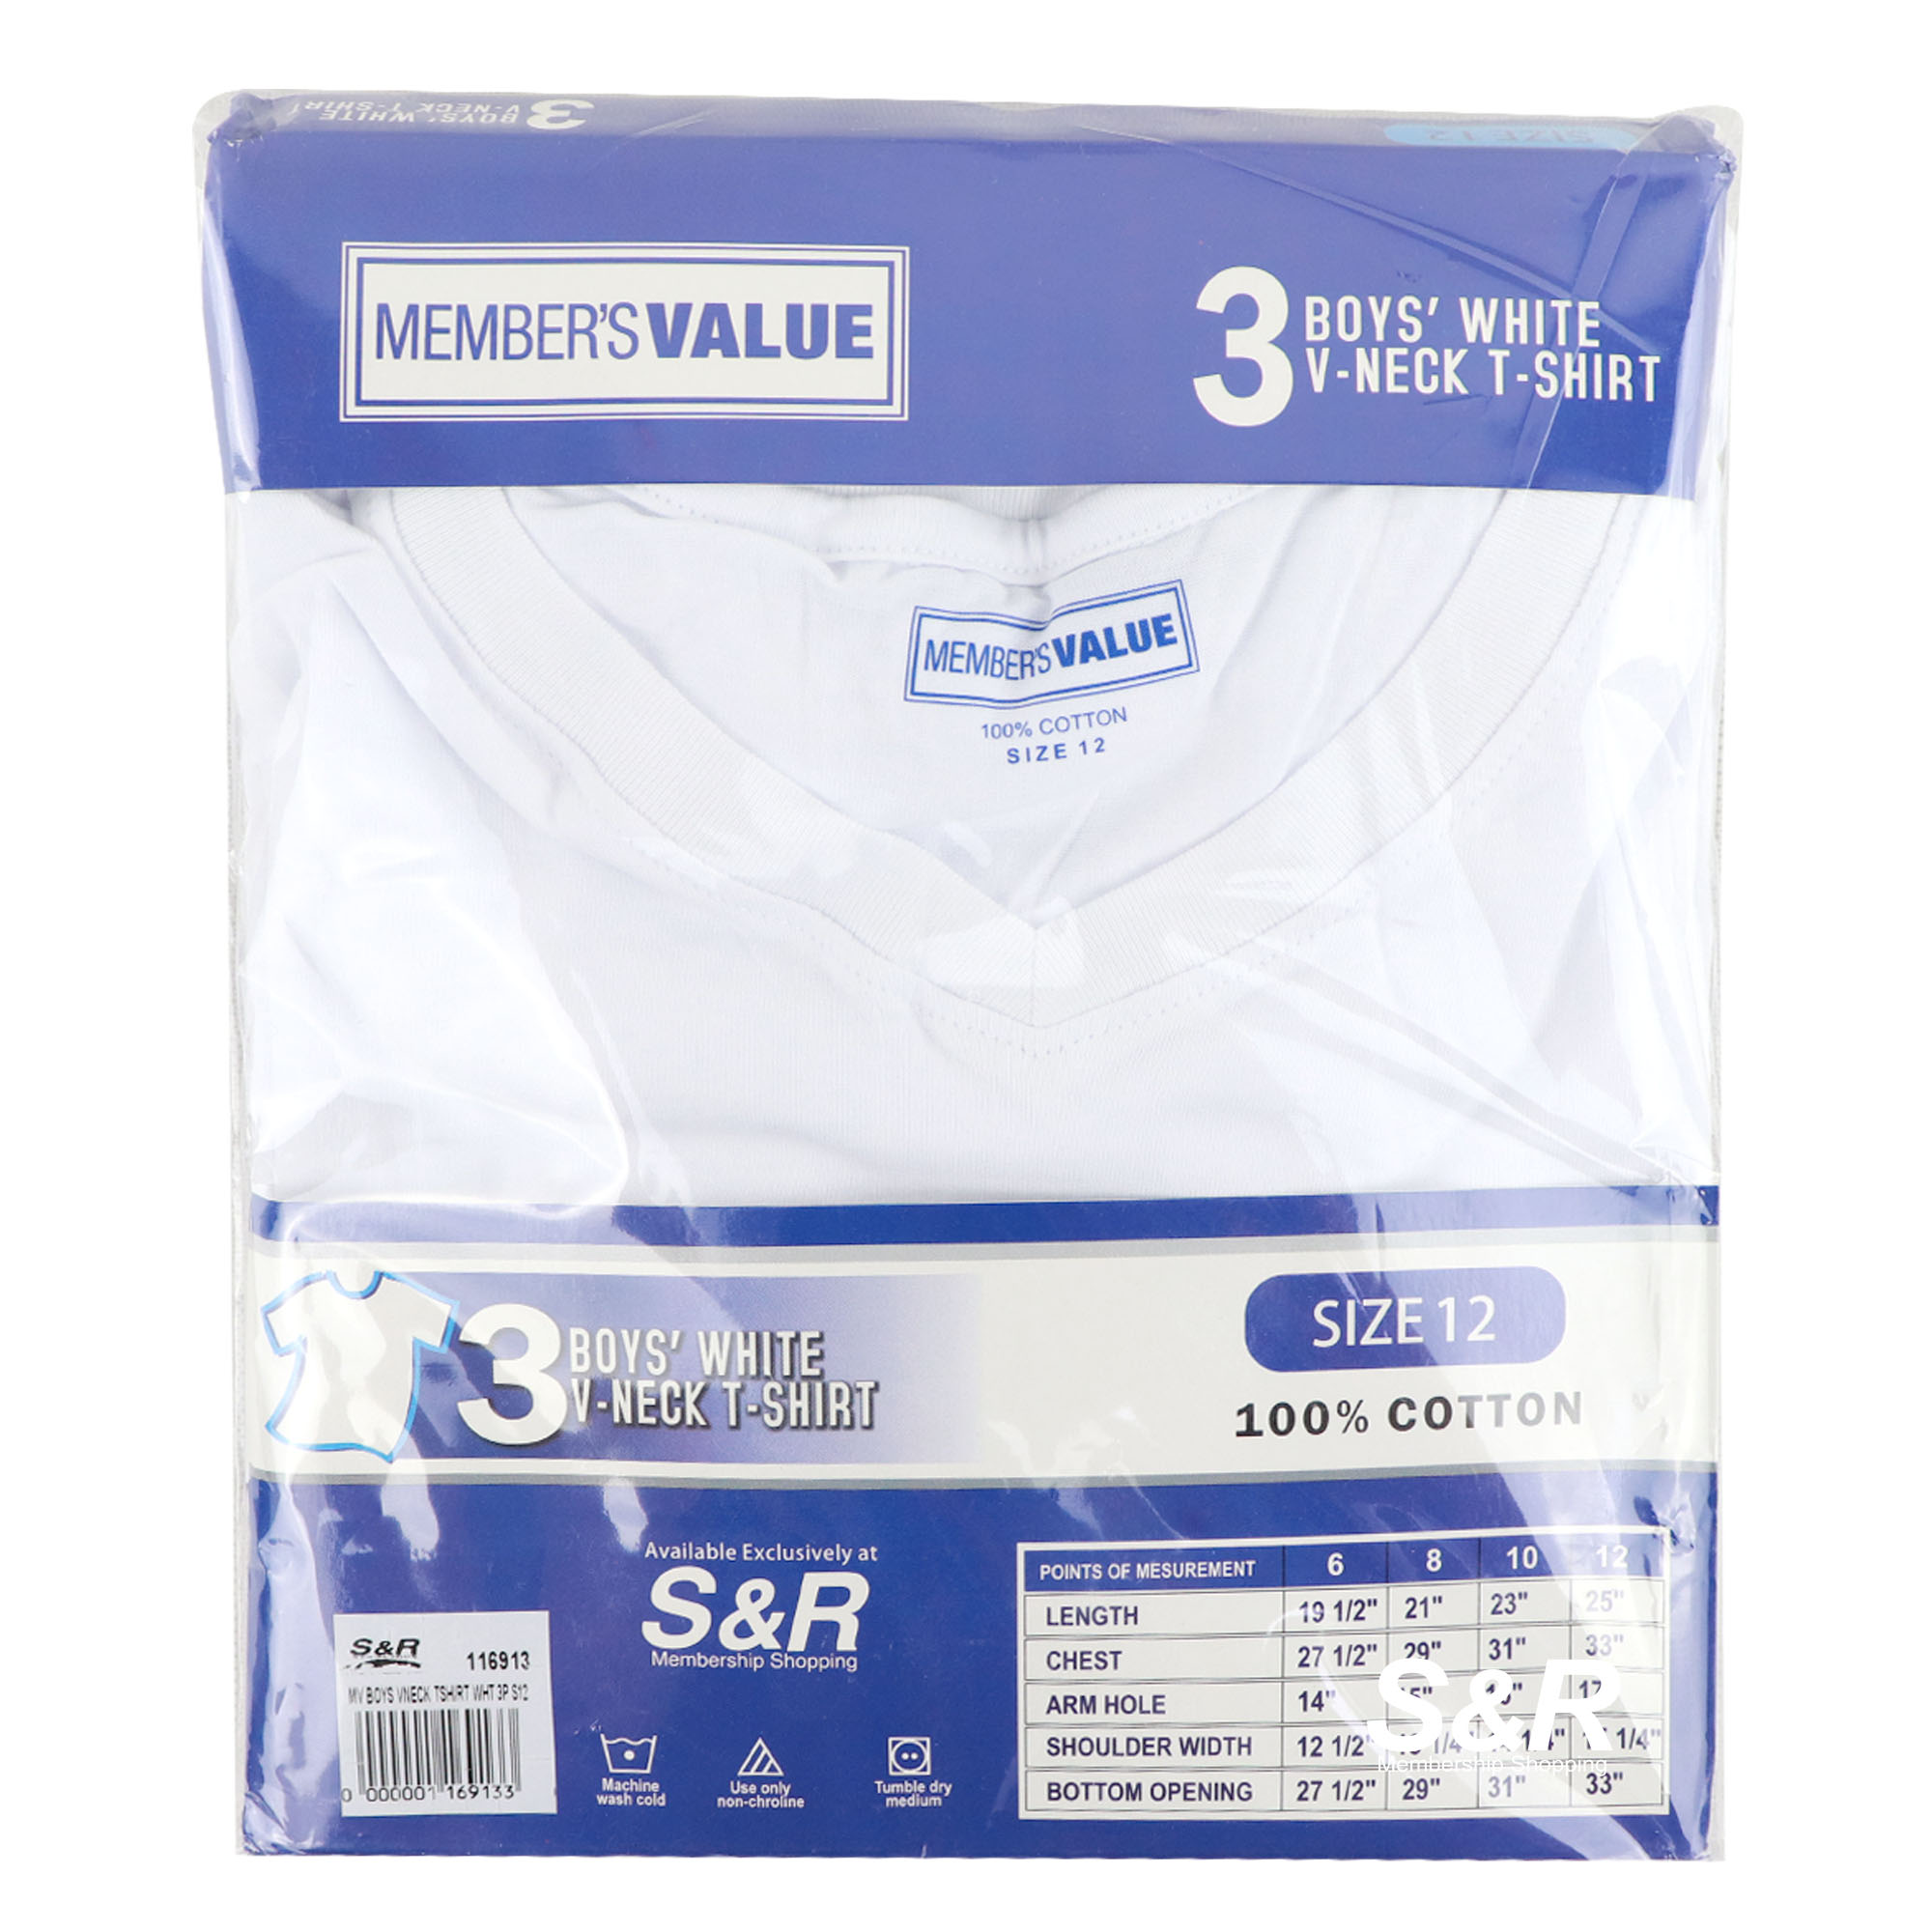 Member’s Value Boys’ White V-Neck T-Shirt White Size 12 3pcs